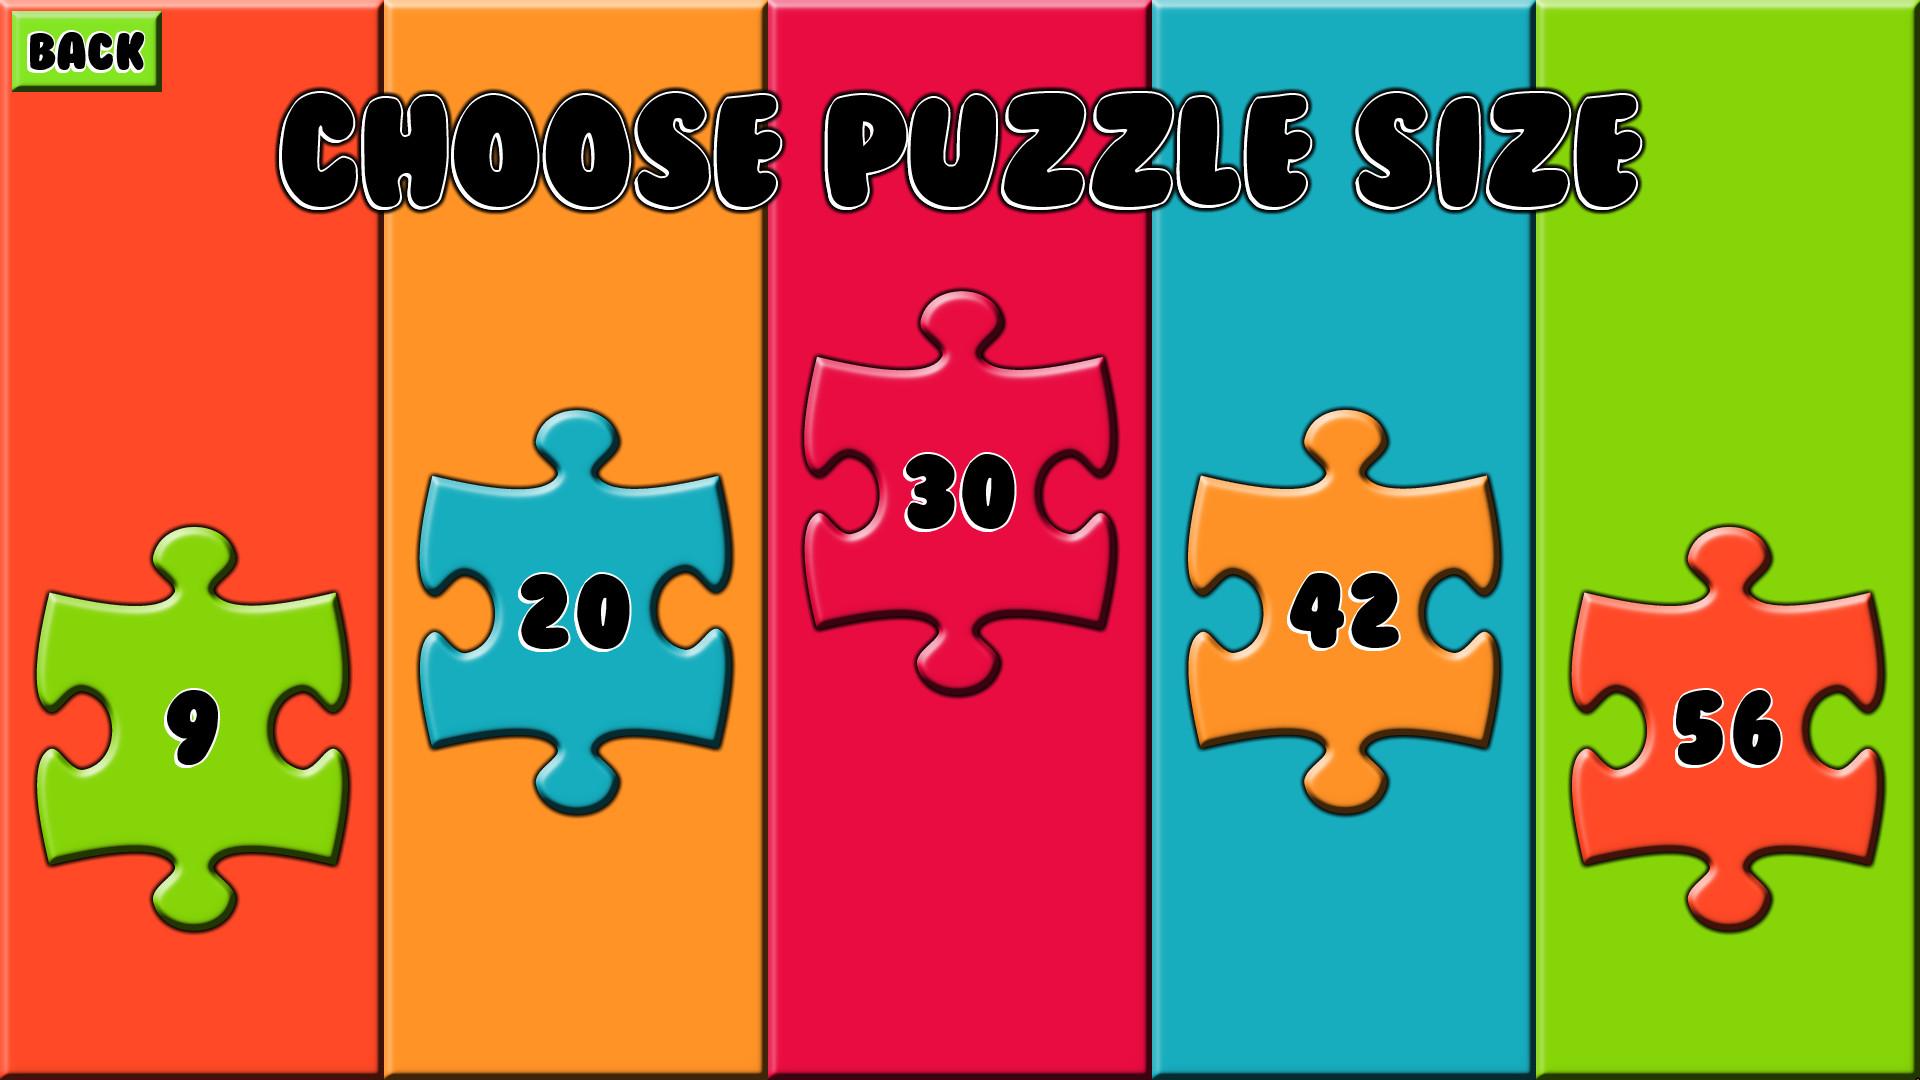 Screenshot №5 from game Pixel Puzzles Junior Jigsaw